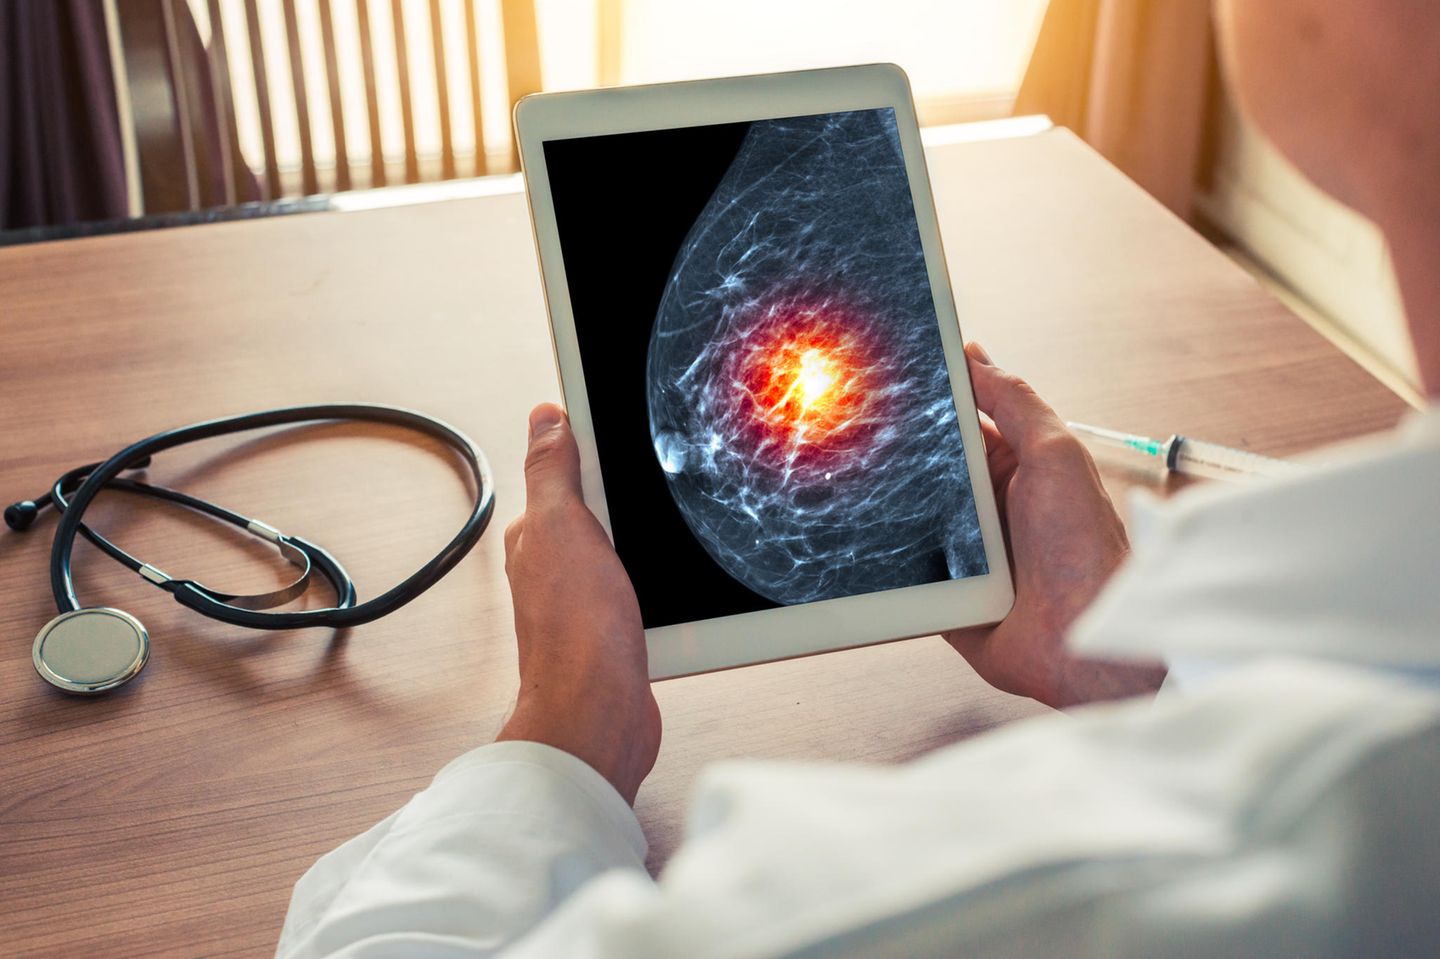 Moderatorin bekommt bei Live-Mammographie Diagnose